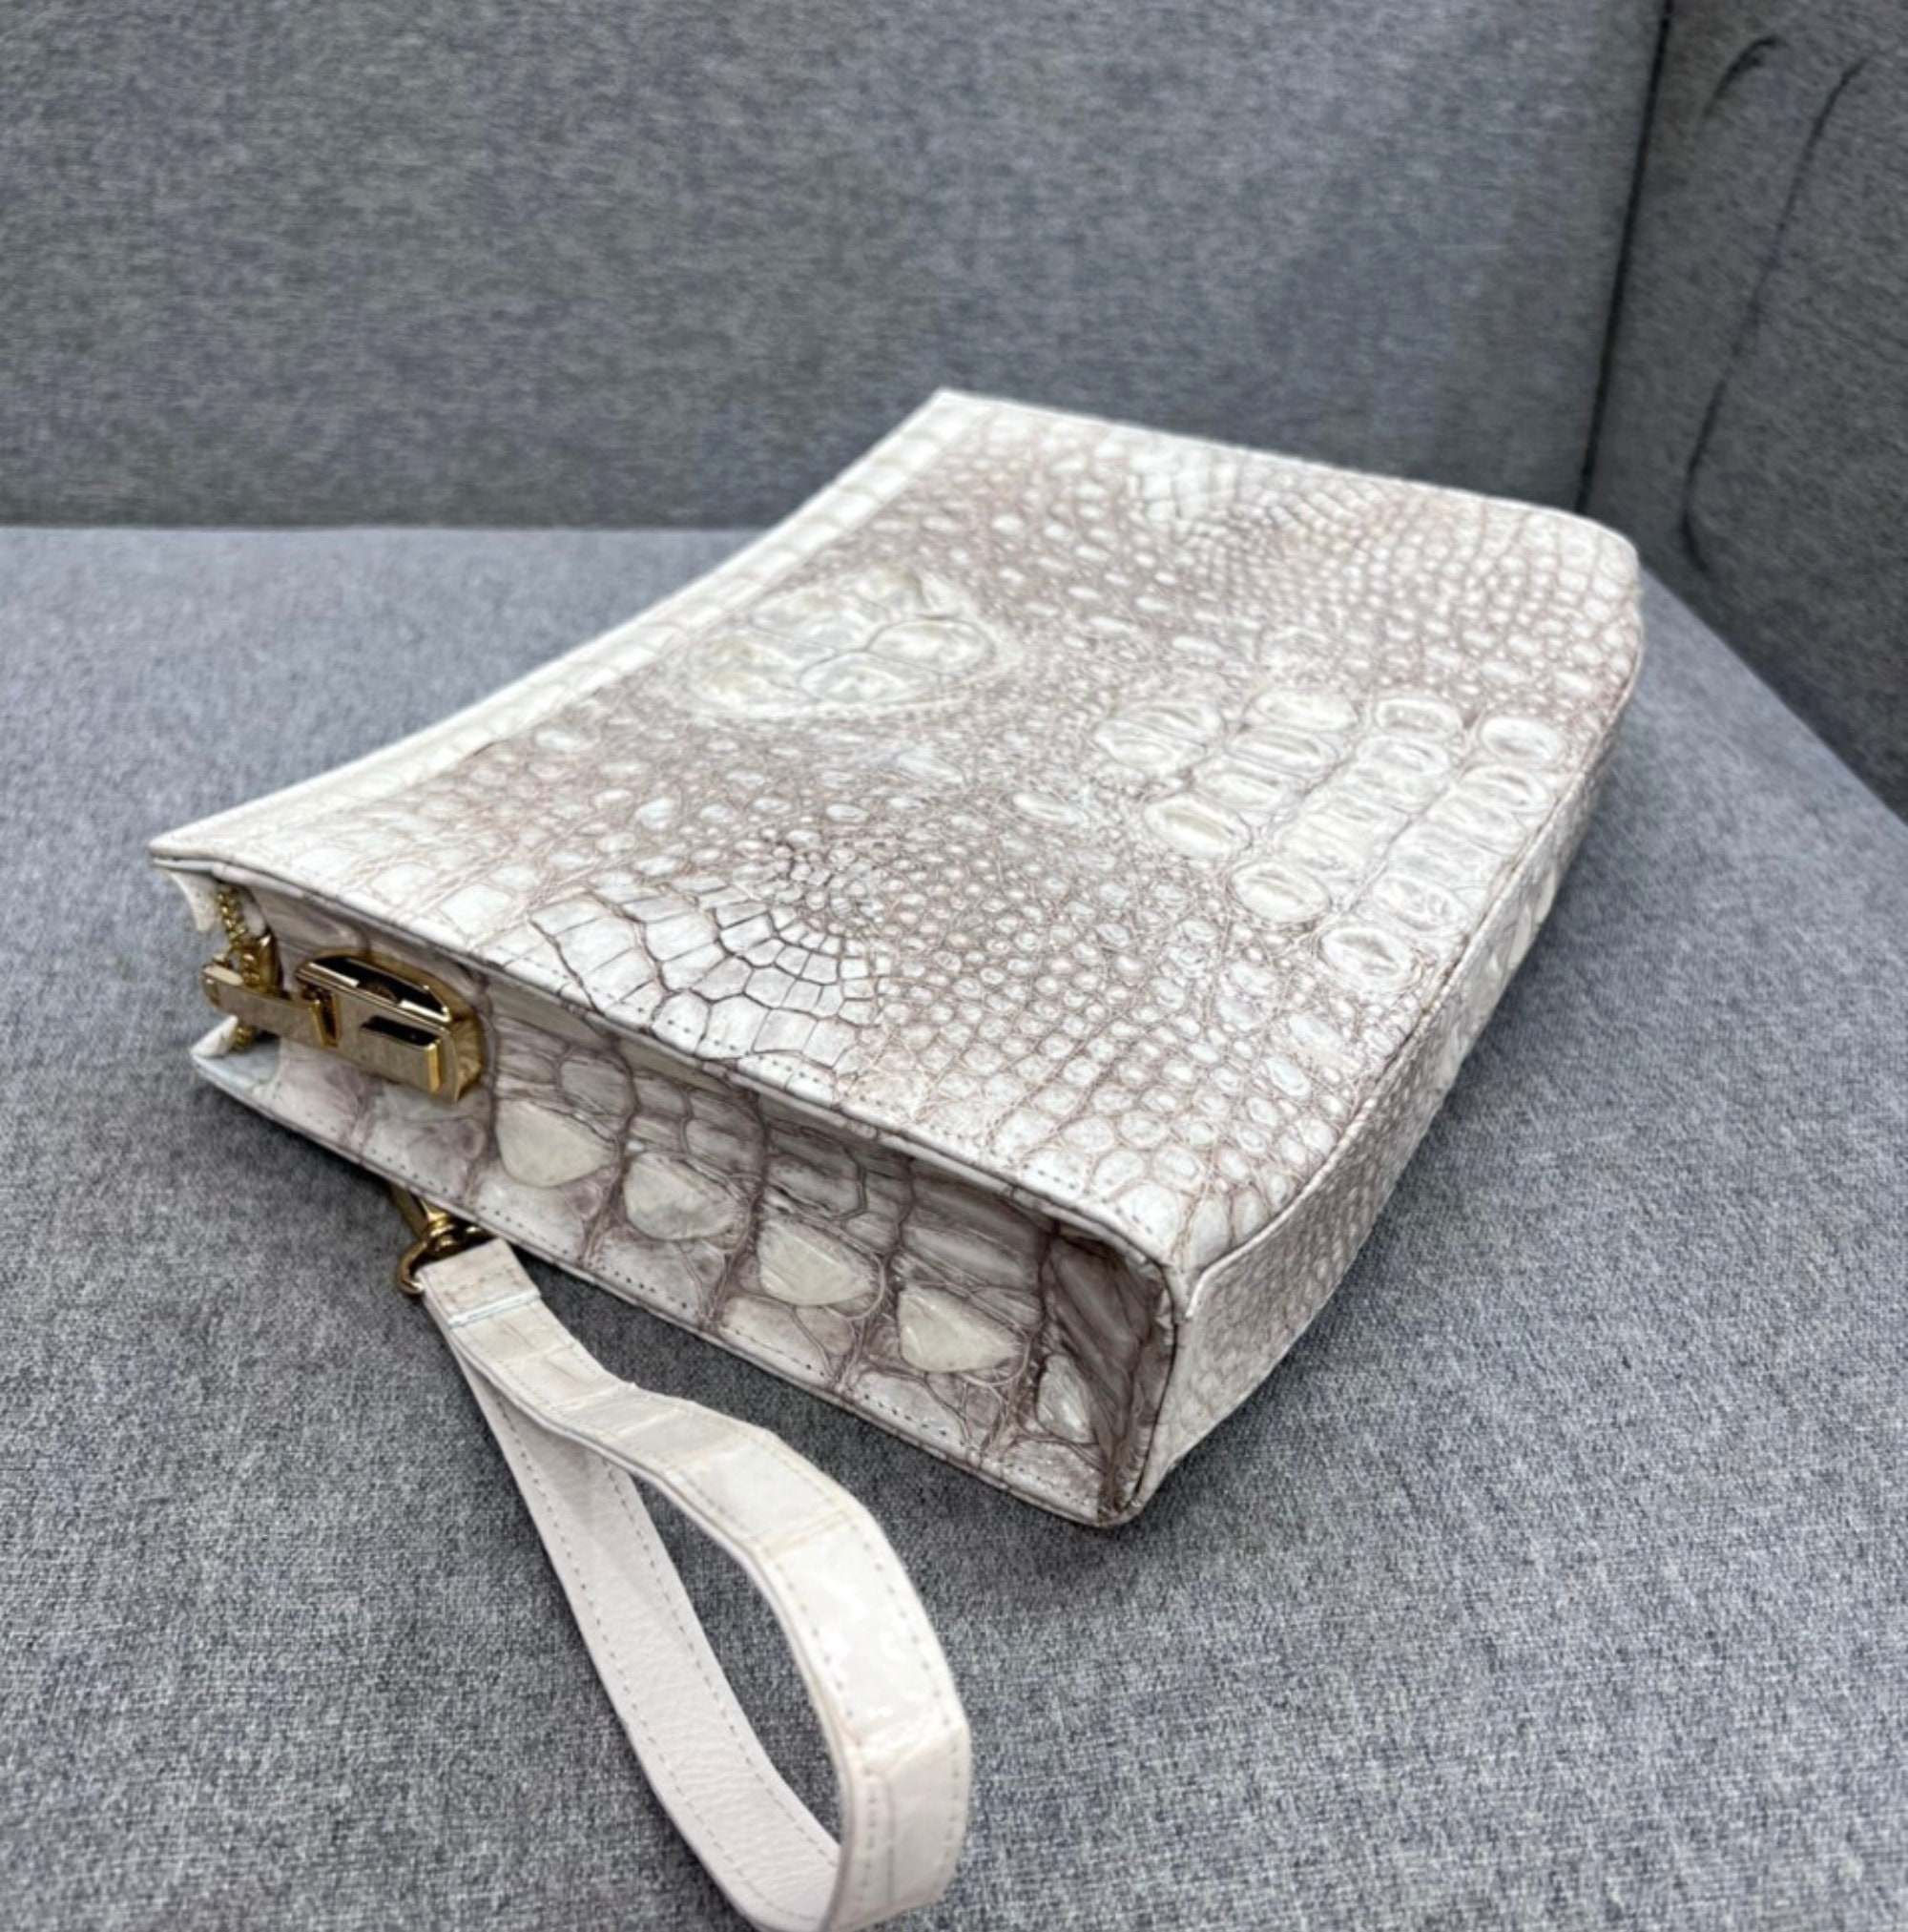 Authentic Croc Leather Women Handbag Bag Cross body White Himalayan w/Strap  New